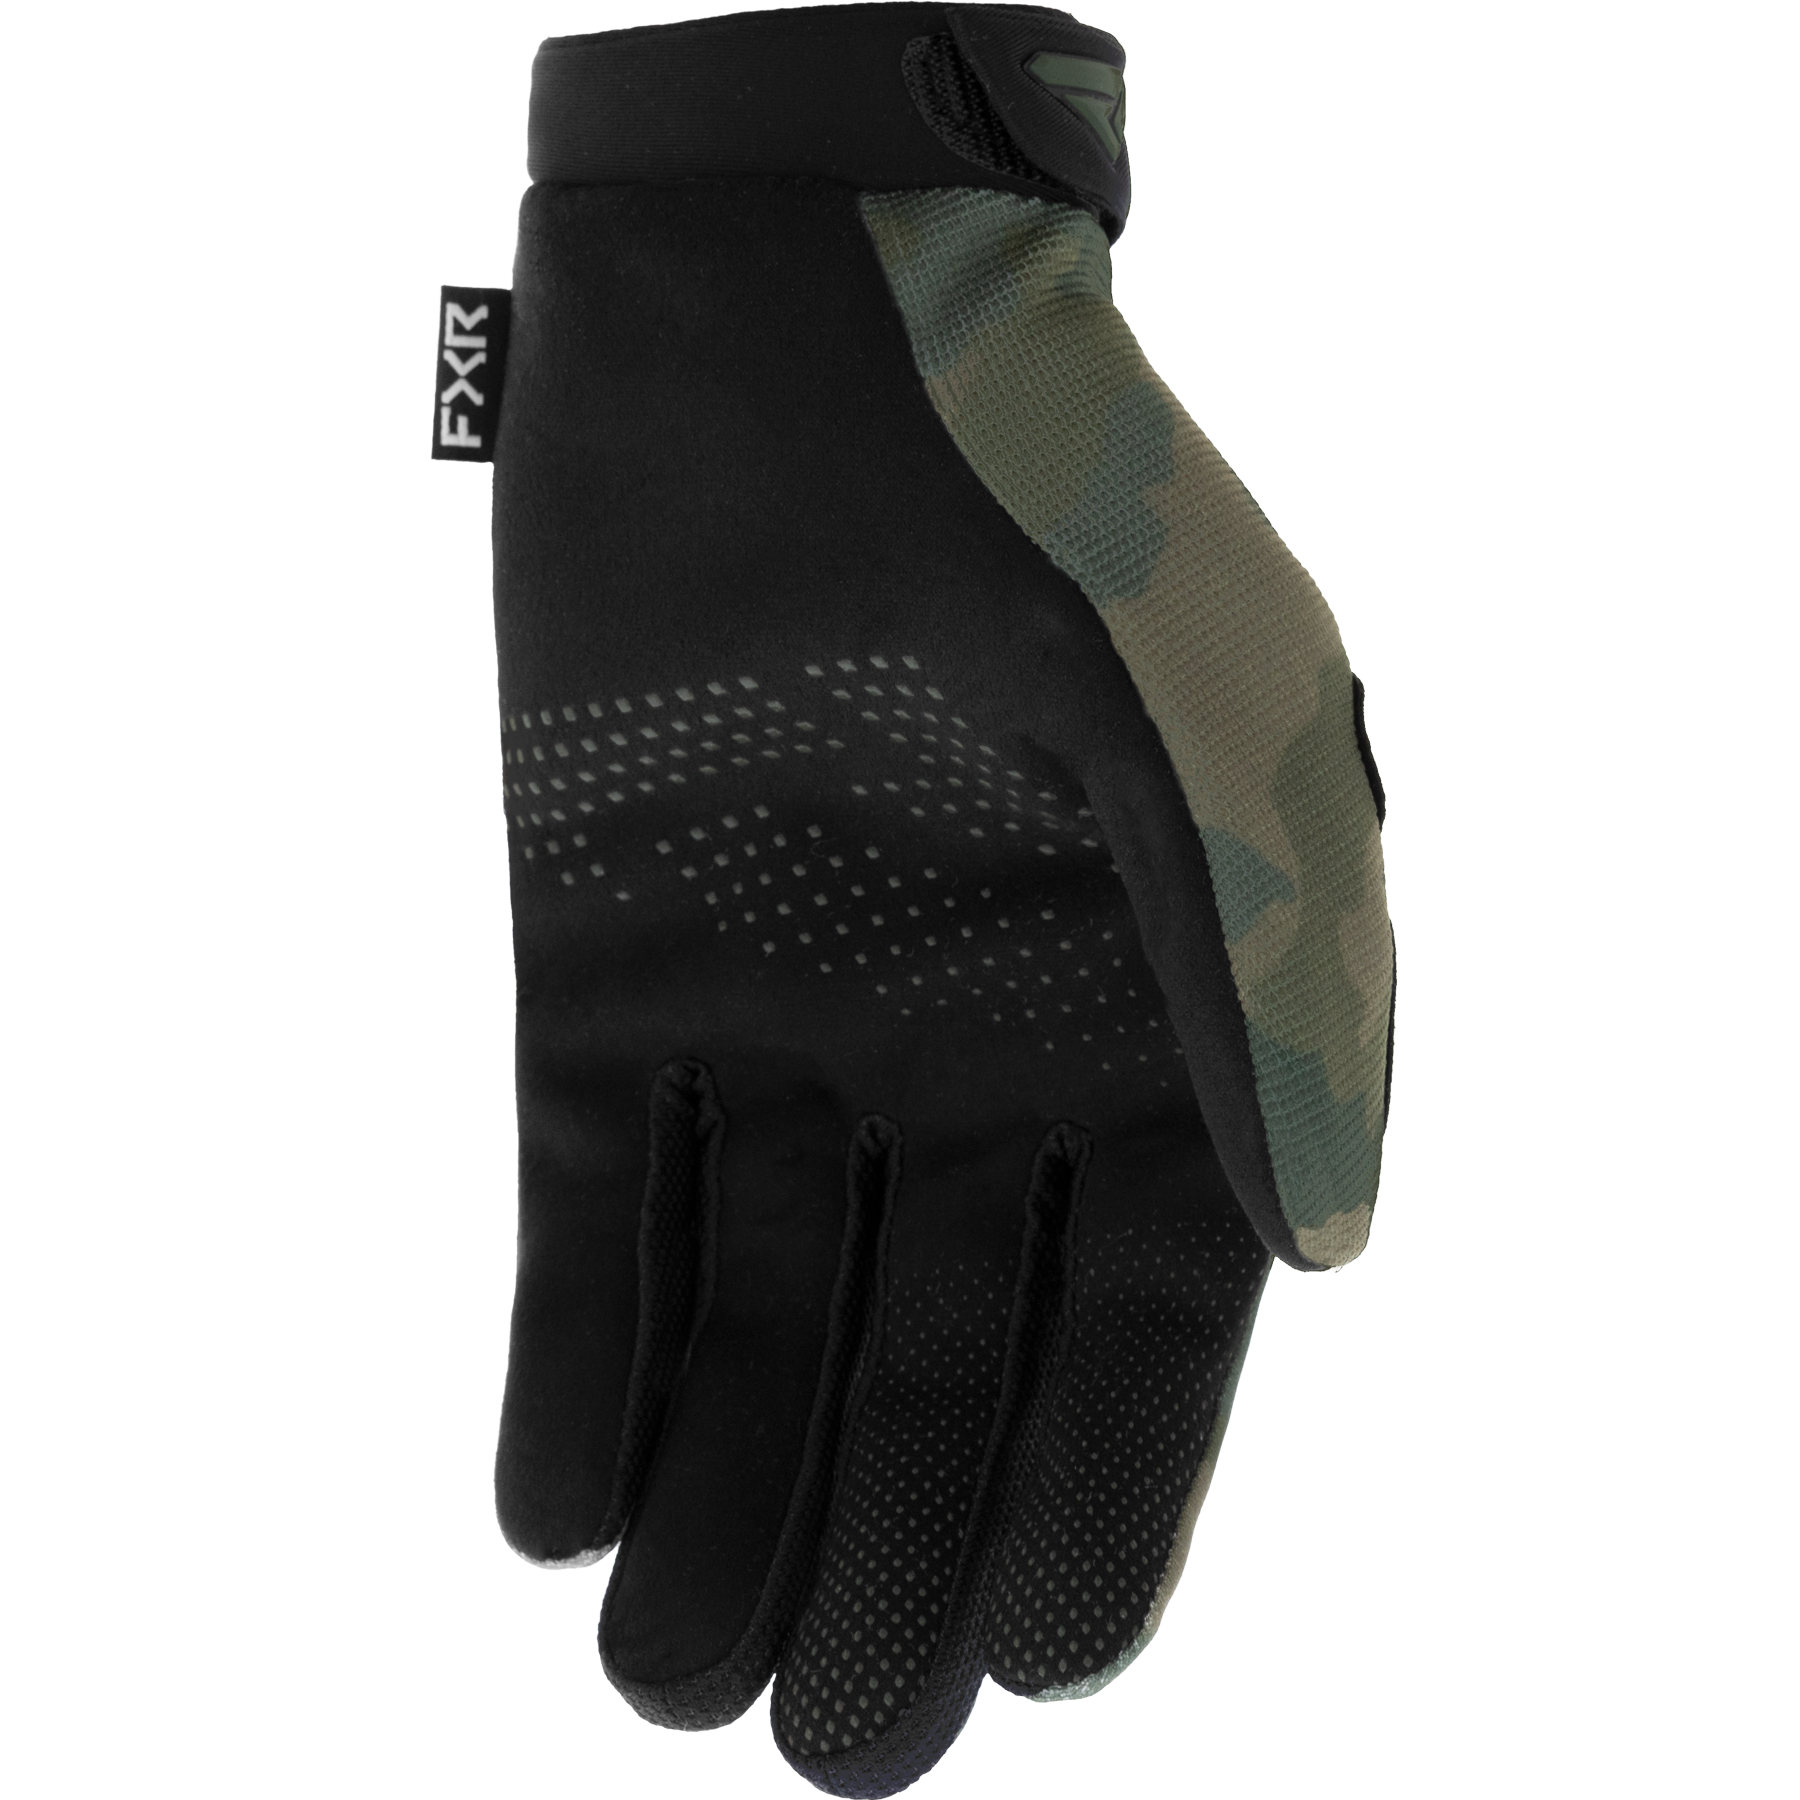 FXR Reflex MX Glove Camo